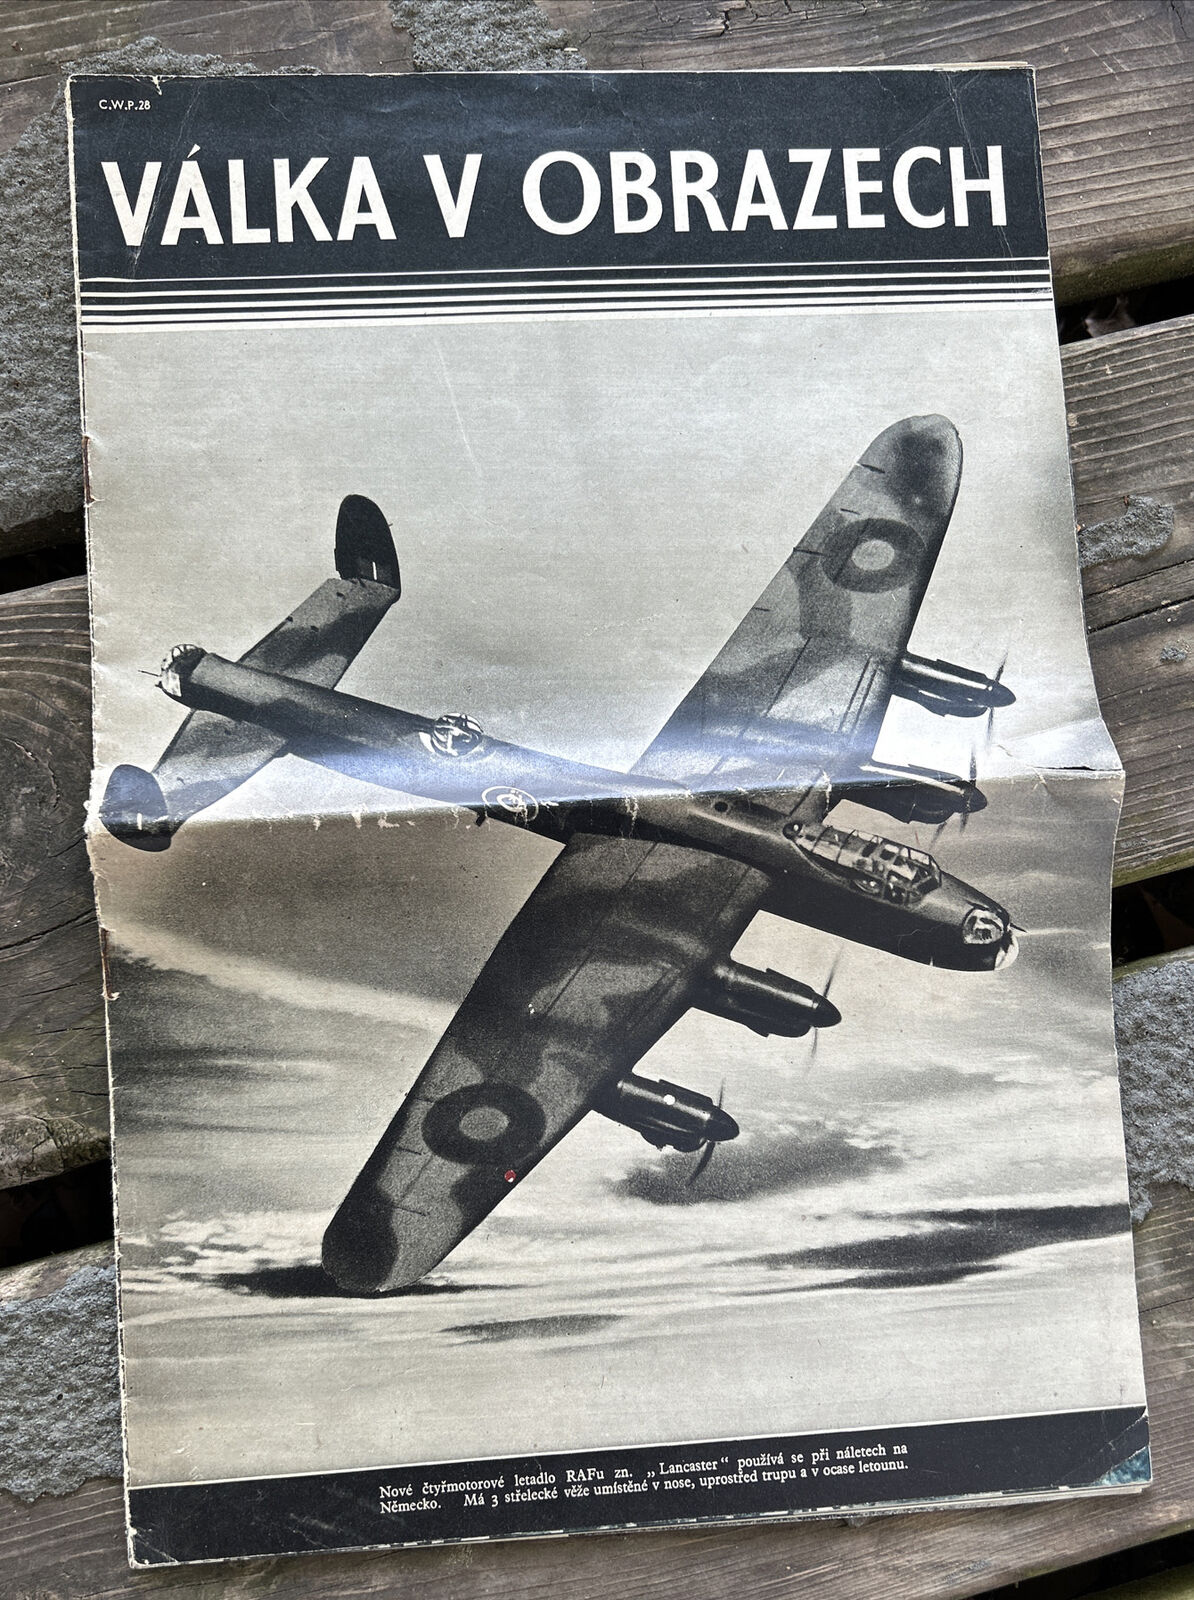 WORLD WAR 2 “VALKA V OBRAZECH” WAR IN PICTURES CZECHOSLOVAKIA MAGAZINE OCT 1942